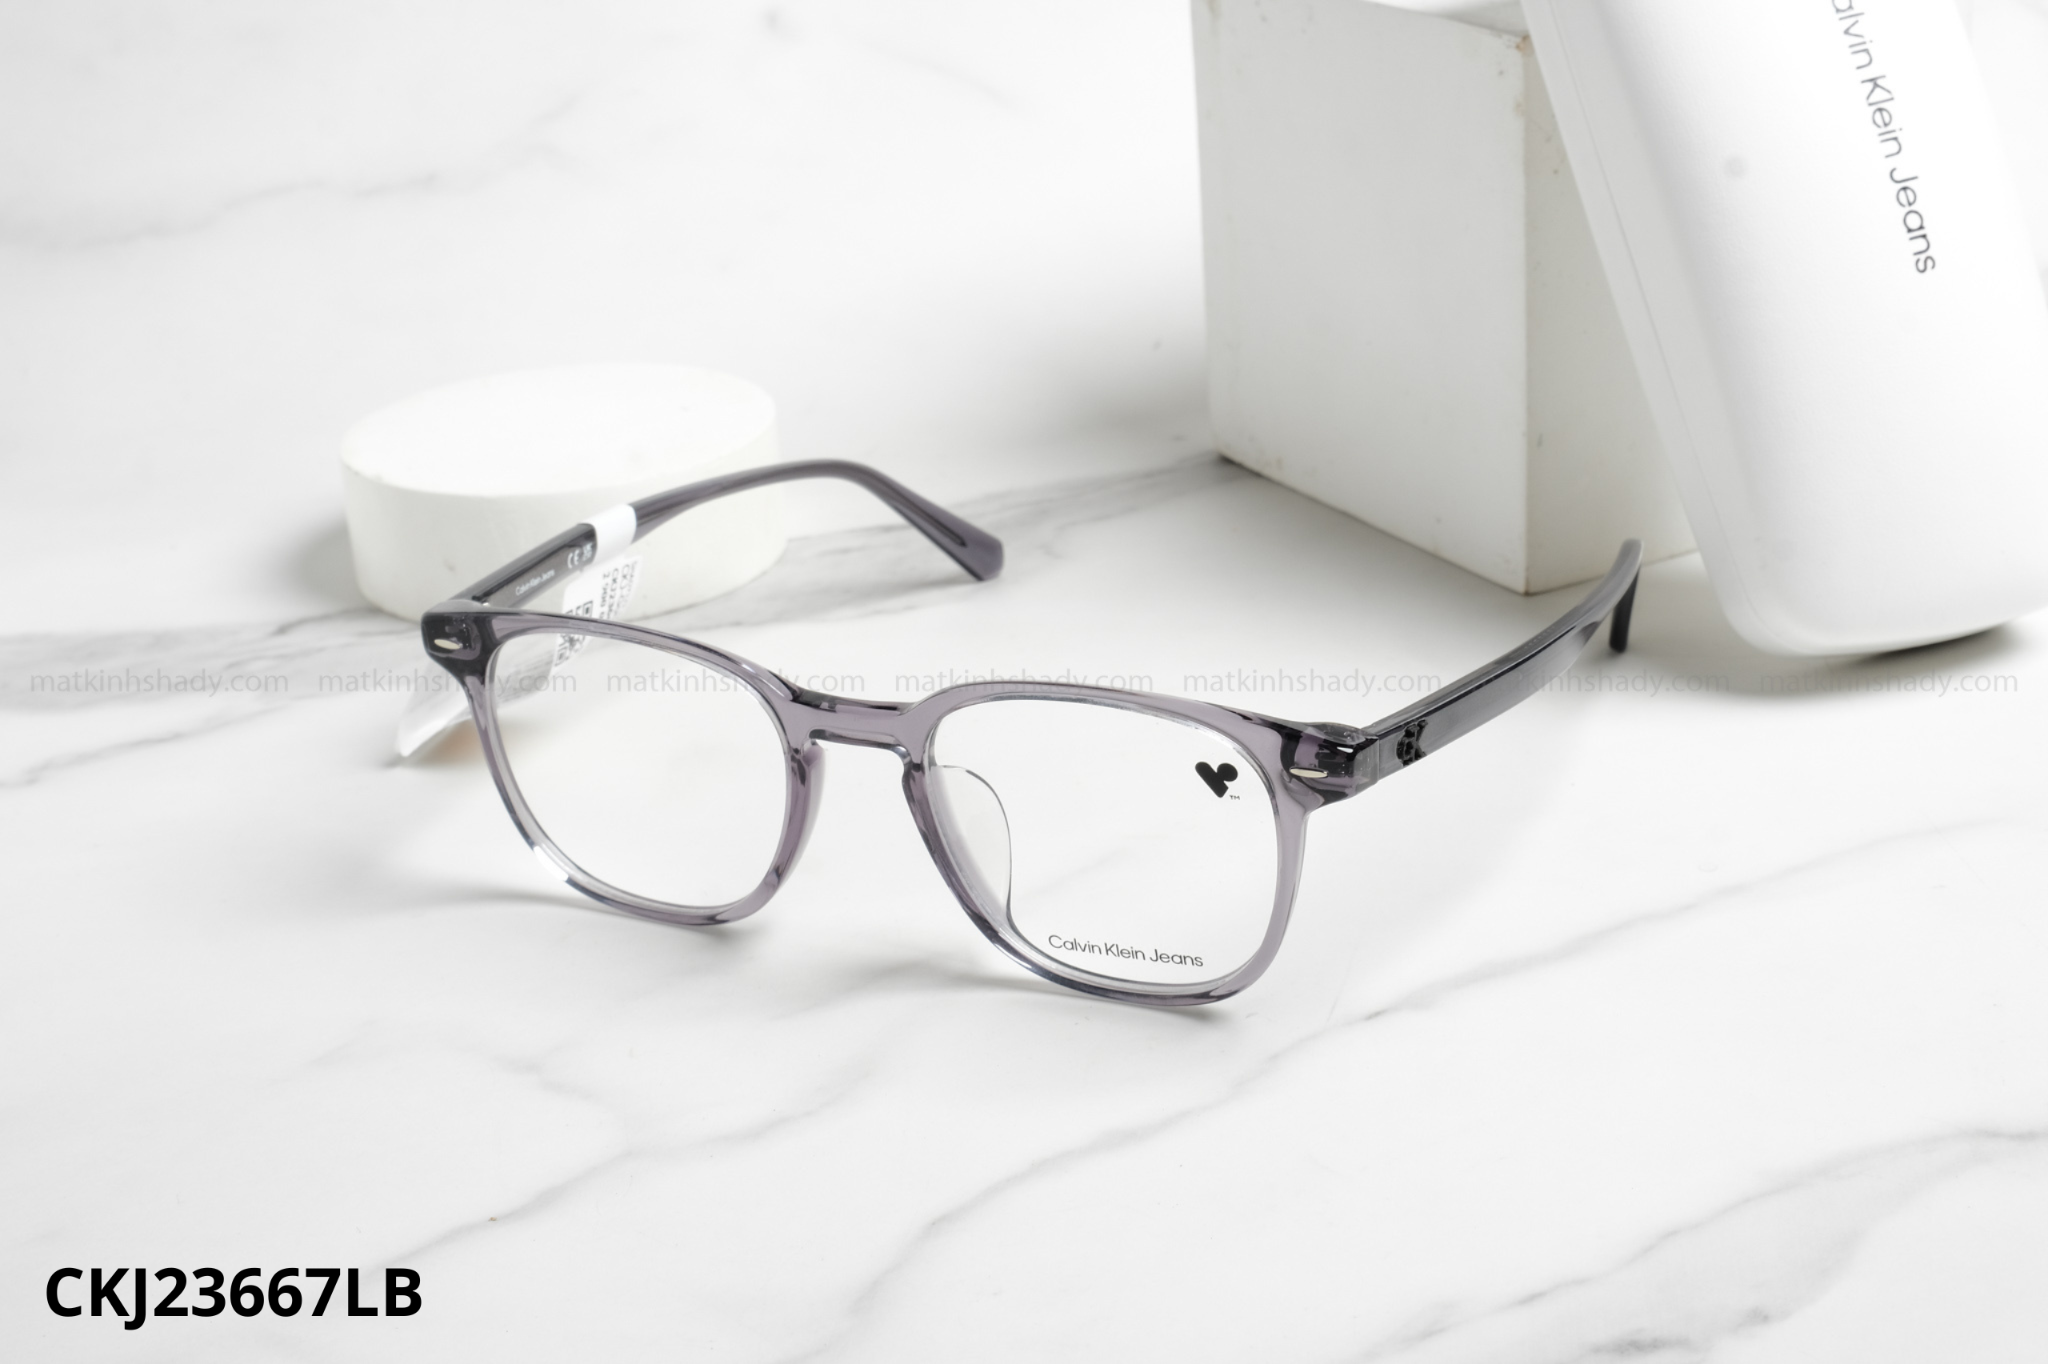  Calvin Klein Eyewear - Glasses - CKJ23667LB 